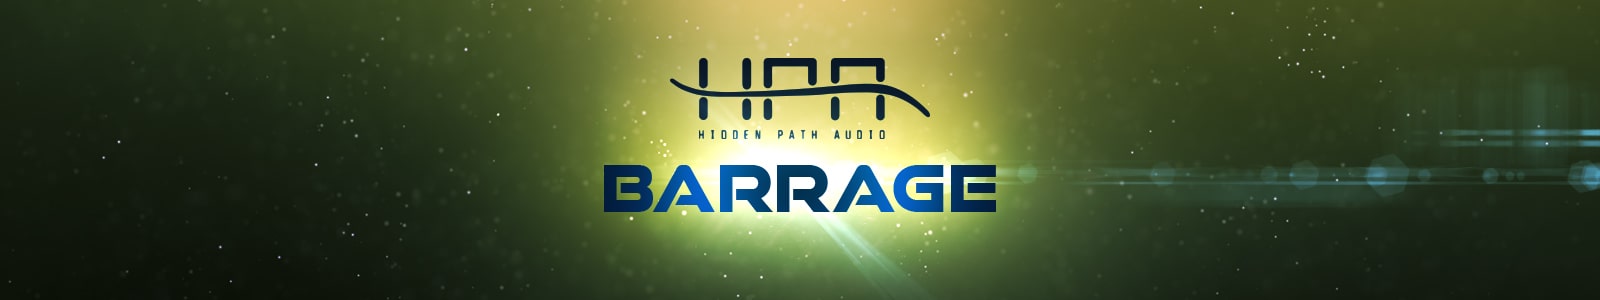 barrage by hidden path audio